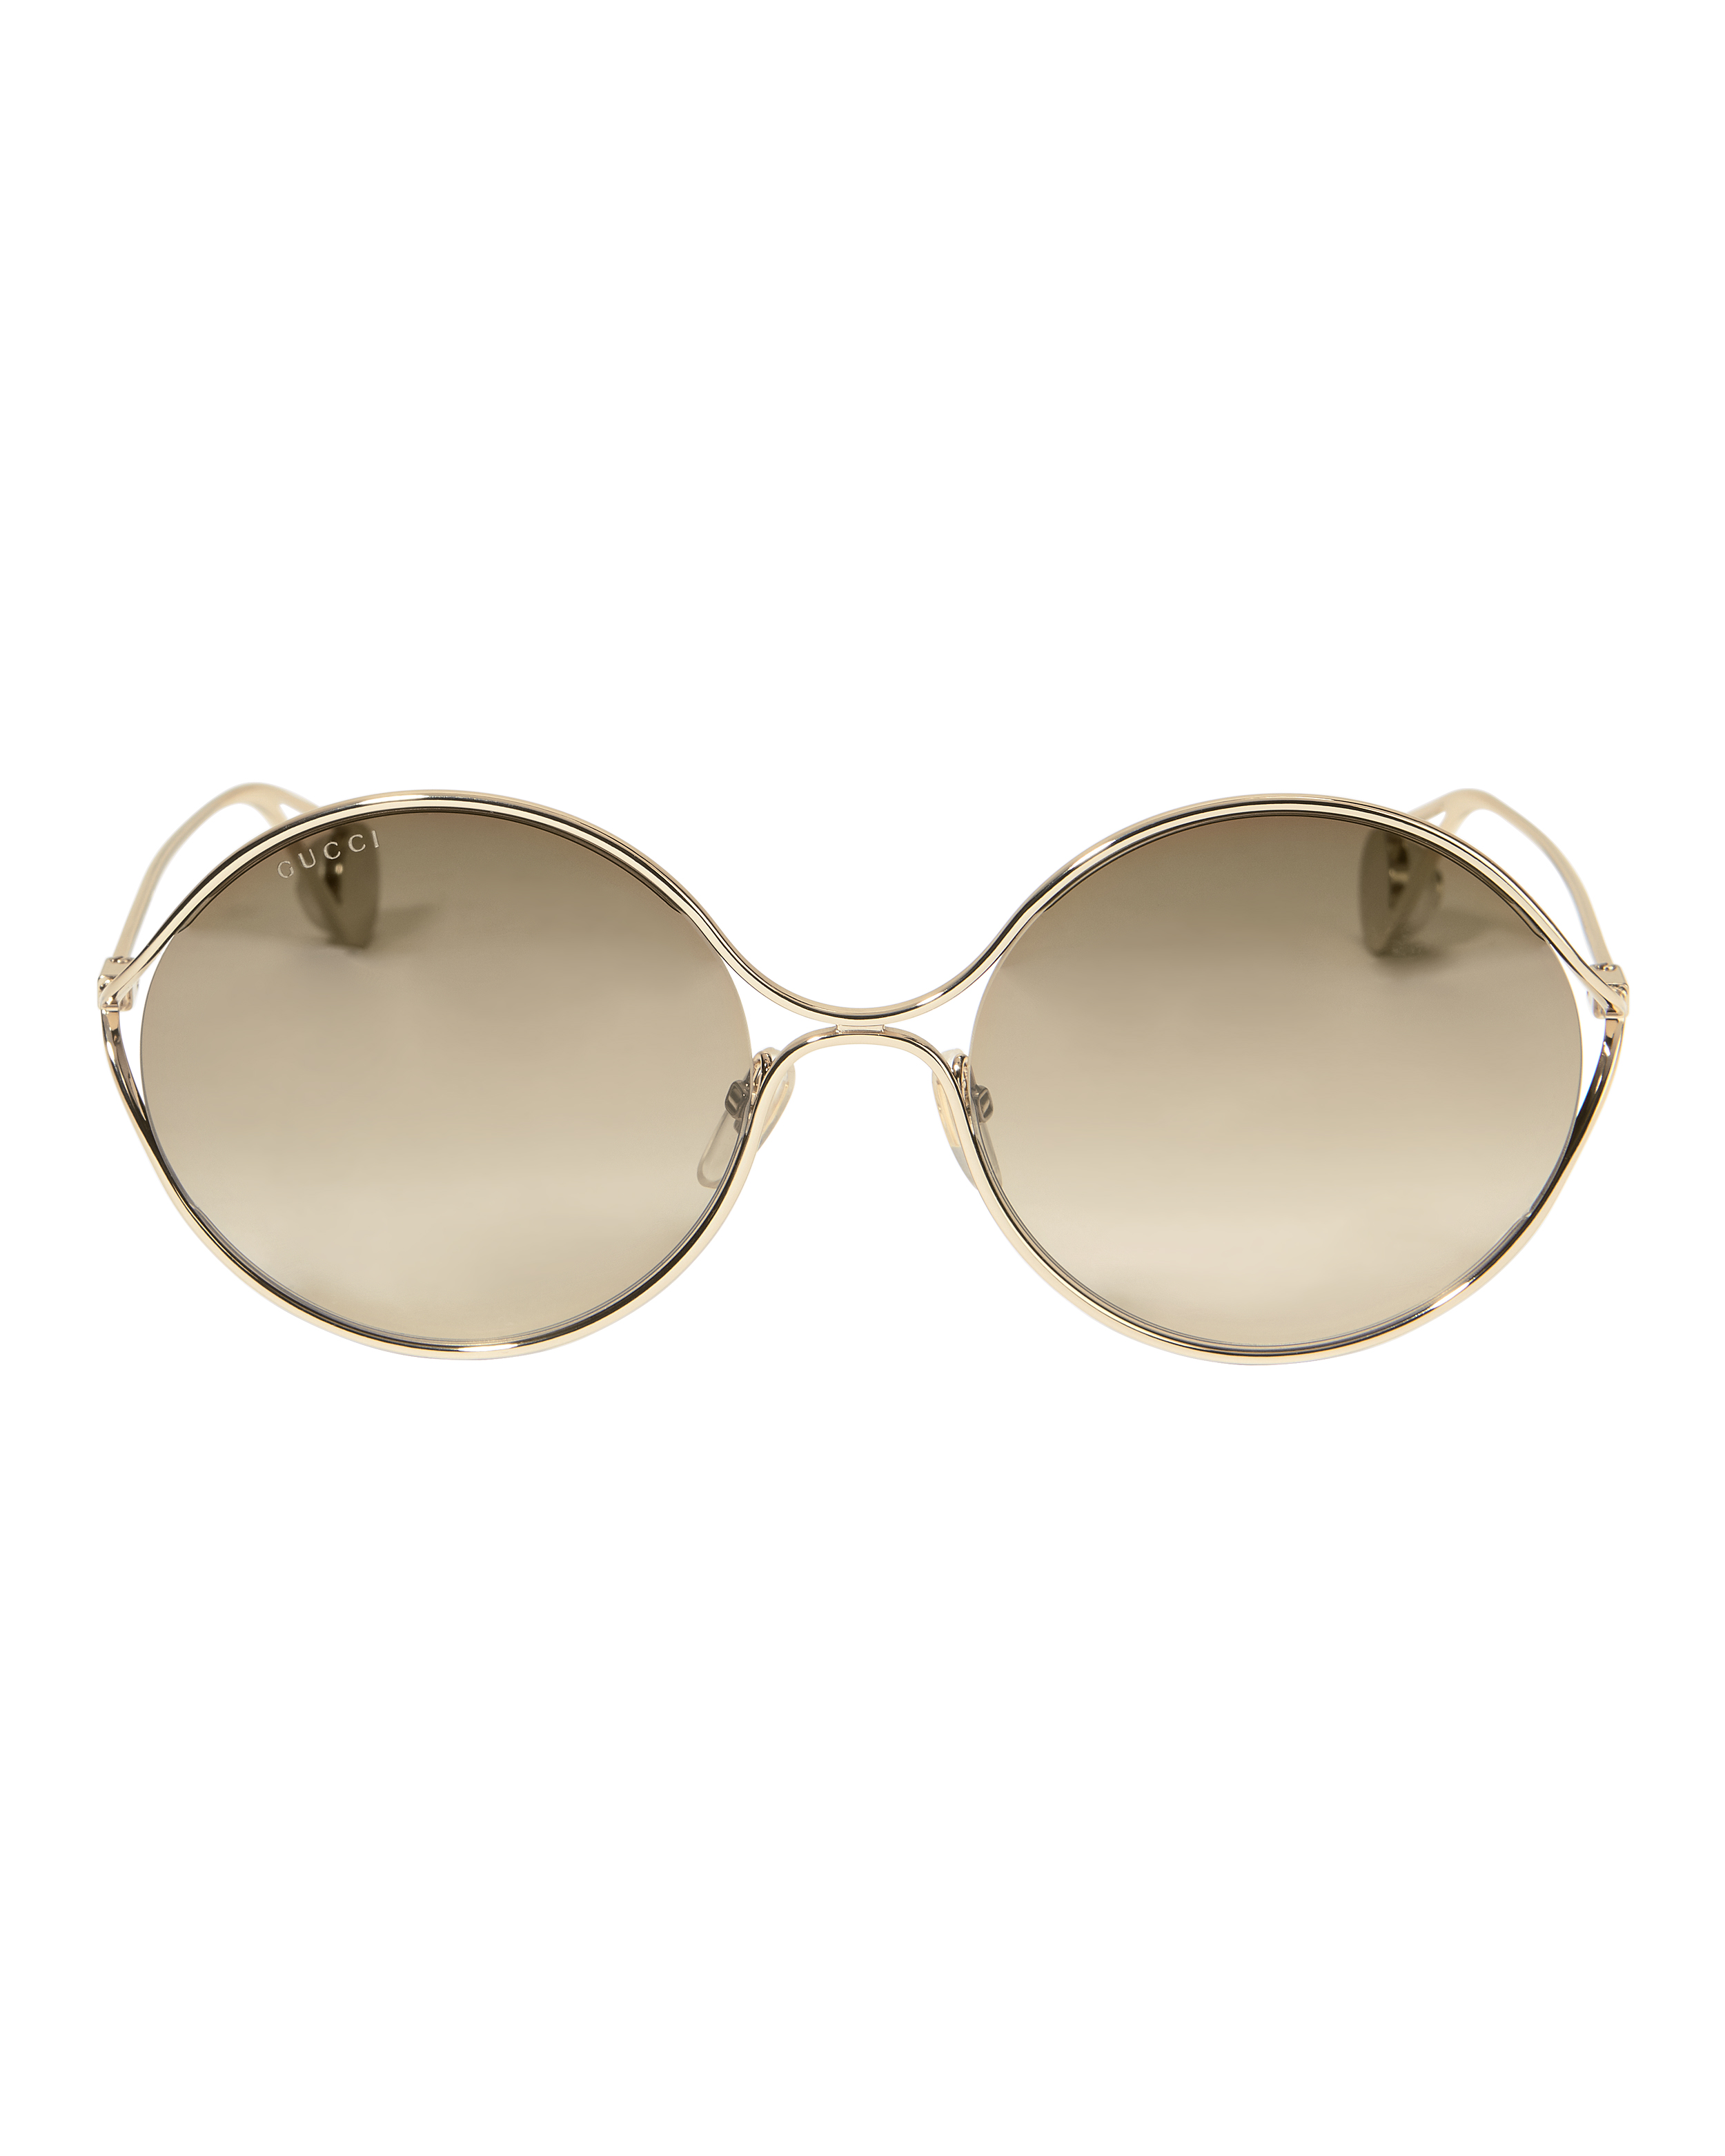 GUCCI Oval Metal Sunglasses,060005551914